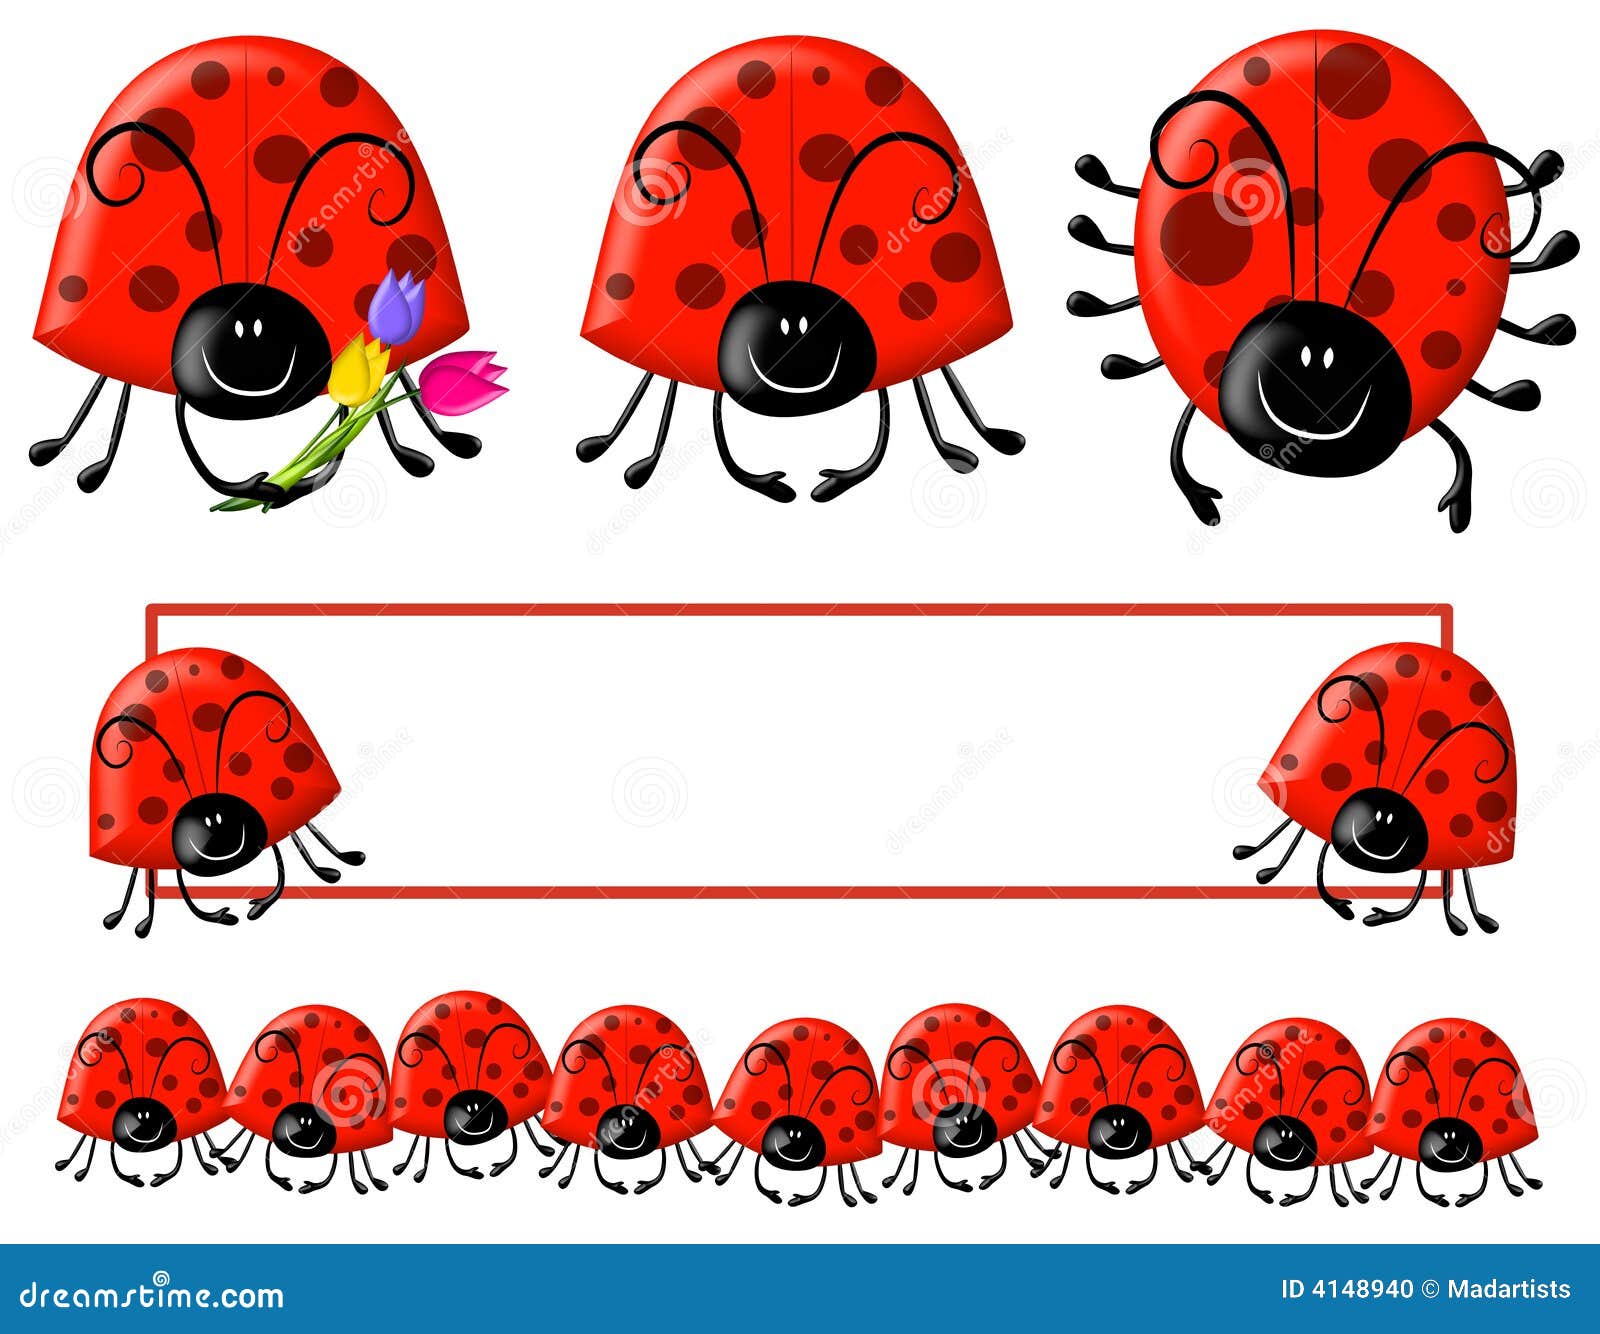 ladybug clip art borders - photo #37